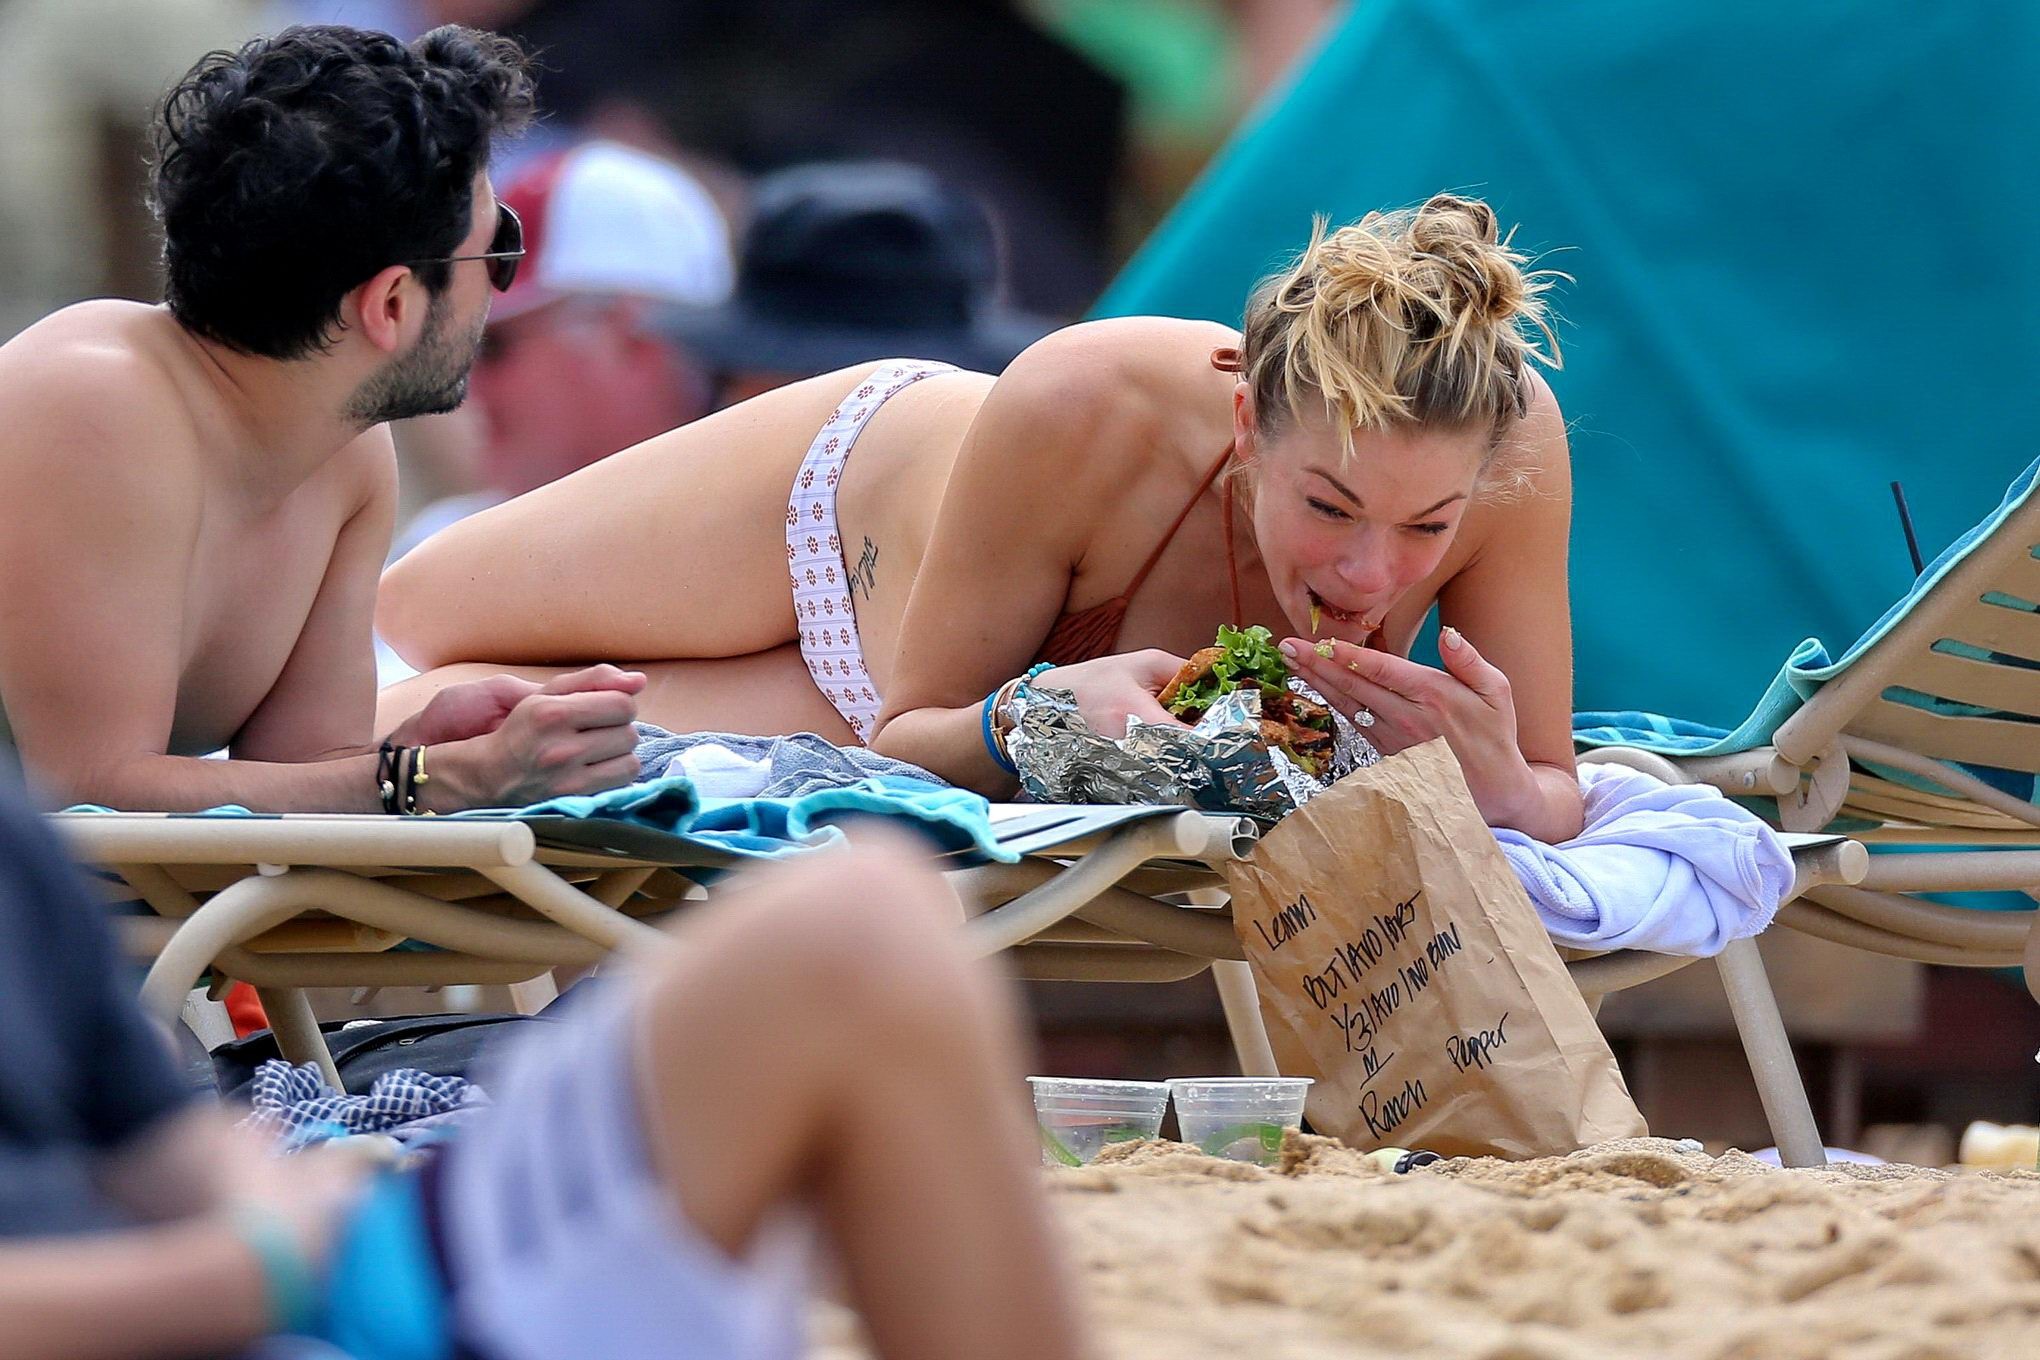 Leann rimes en bikini bronceándose en una playa de hawaii
 #75203300